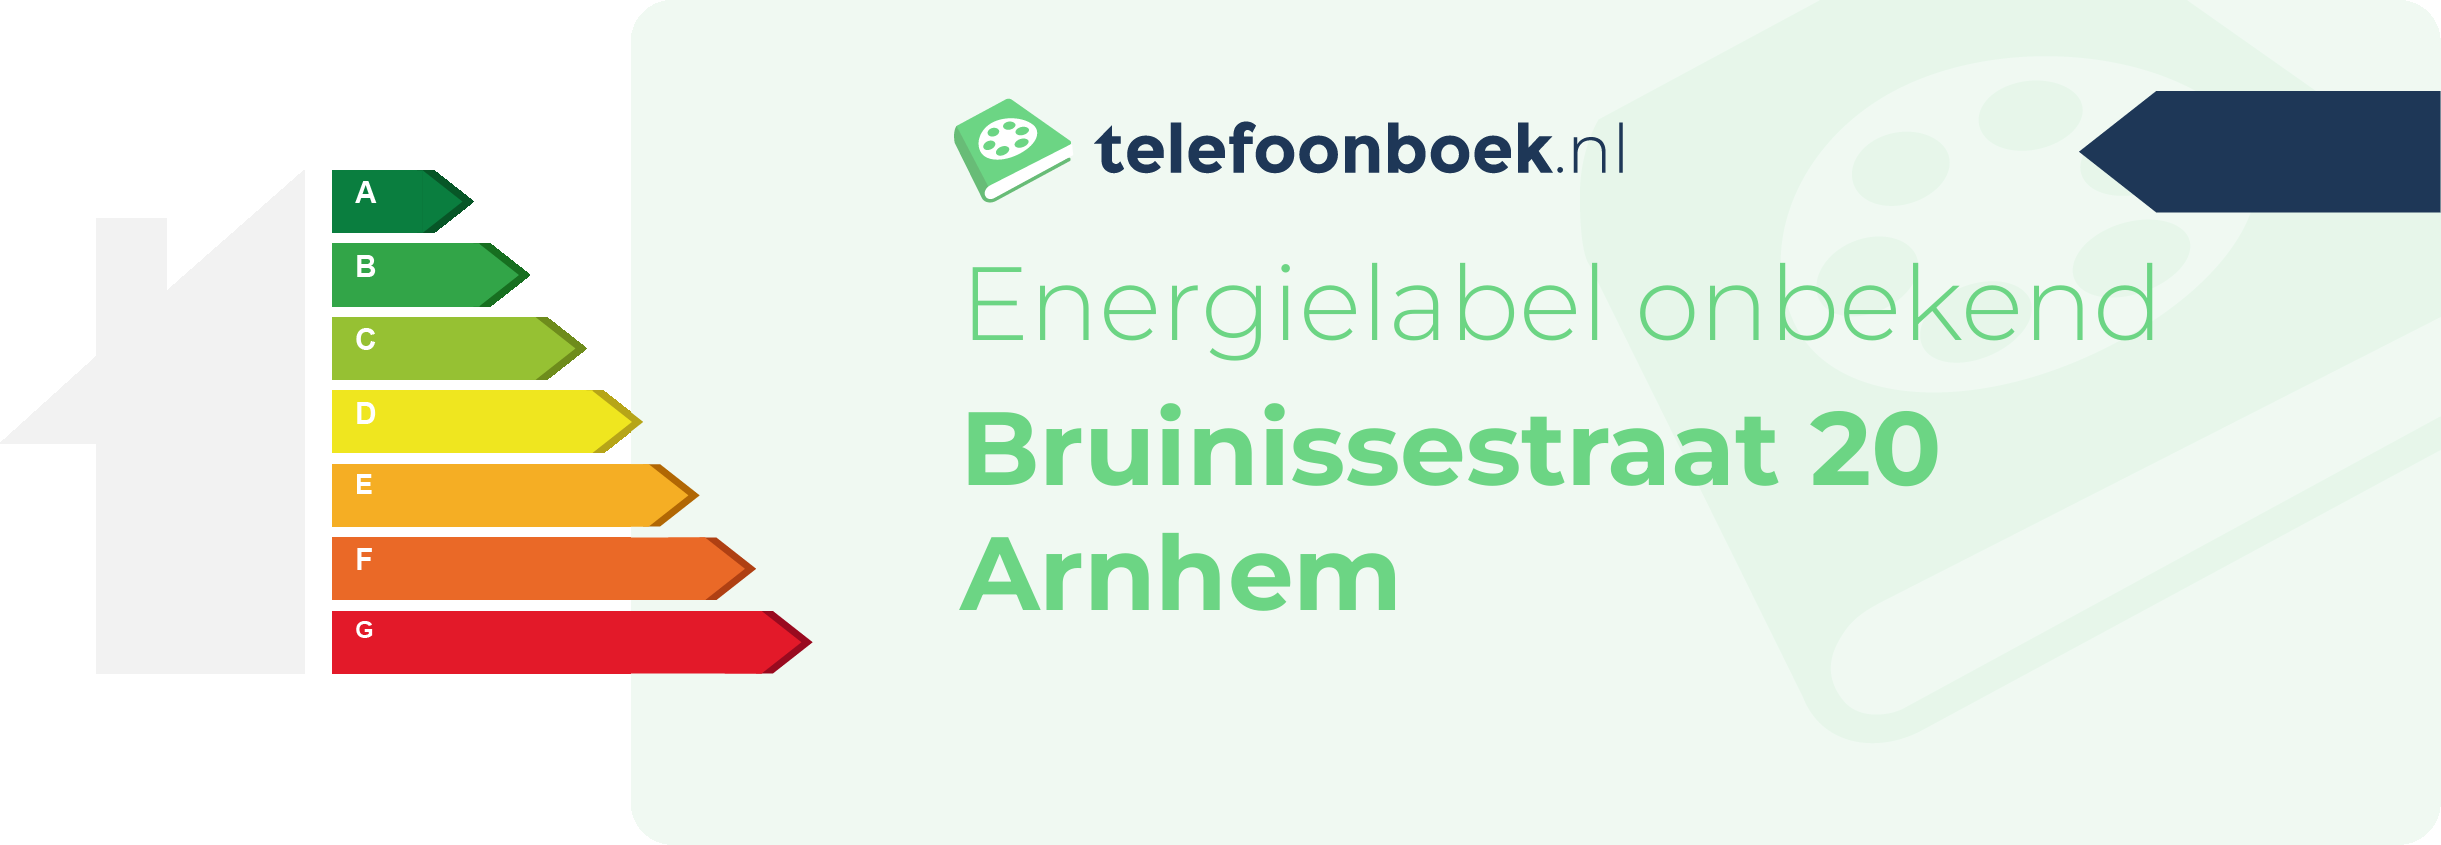 Energielabel Bruinissestraat 20 Arnhem